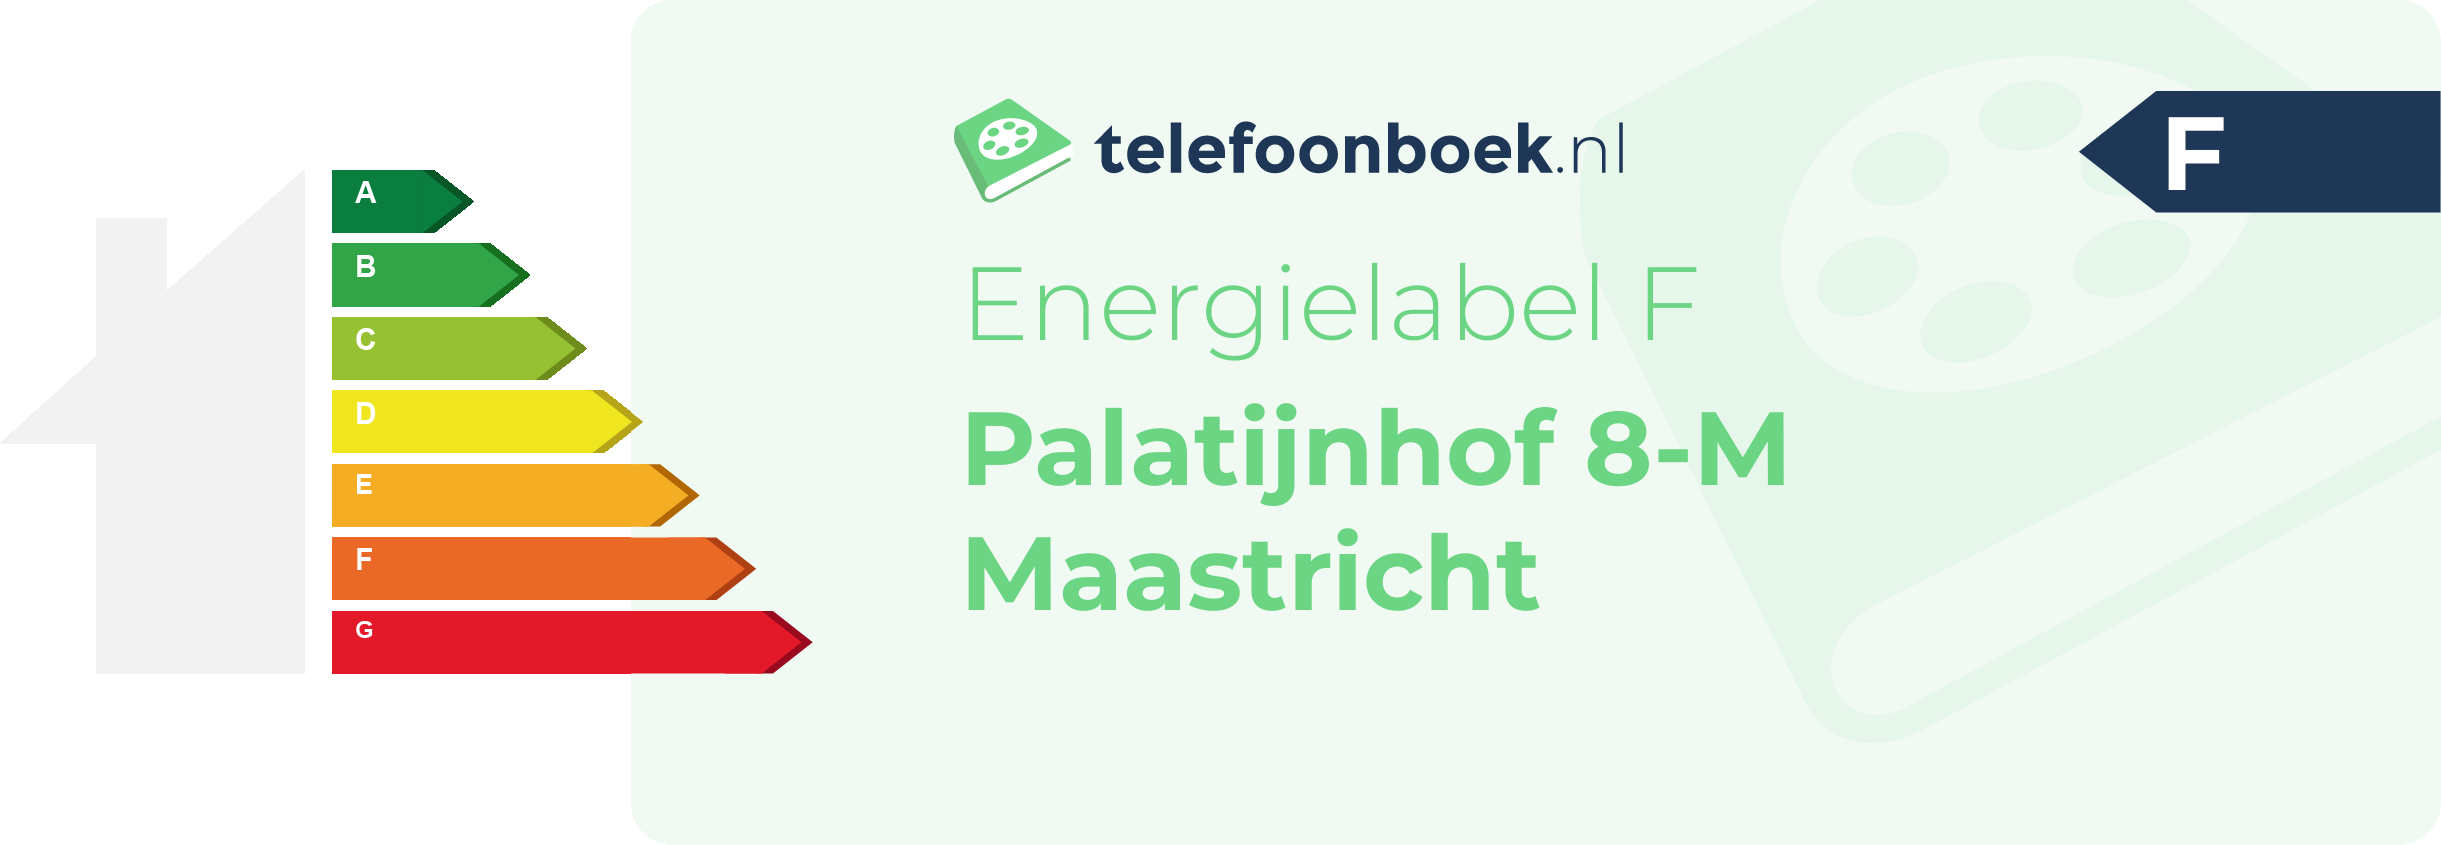 Energielabel Palatijnhof 8-M Maastricht